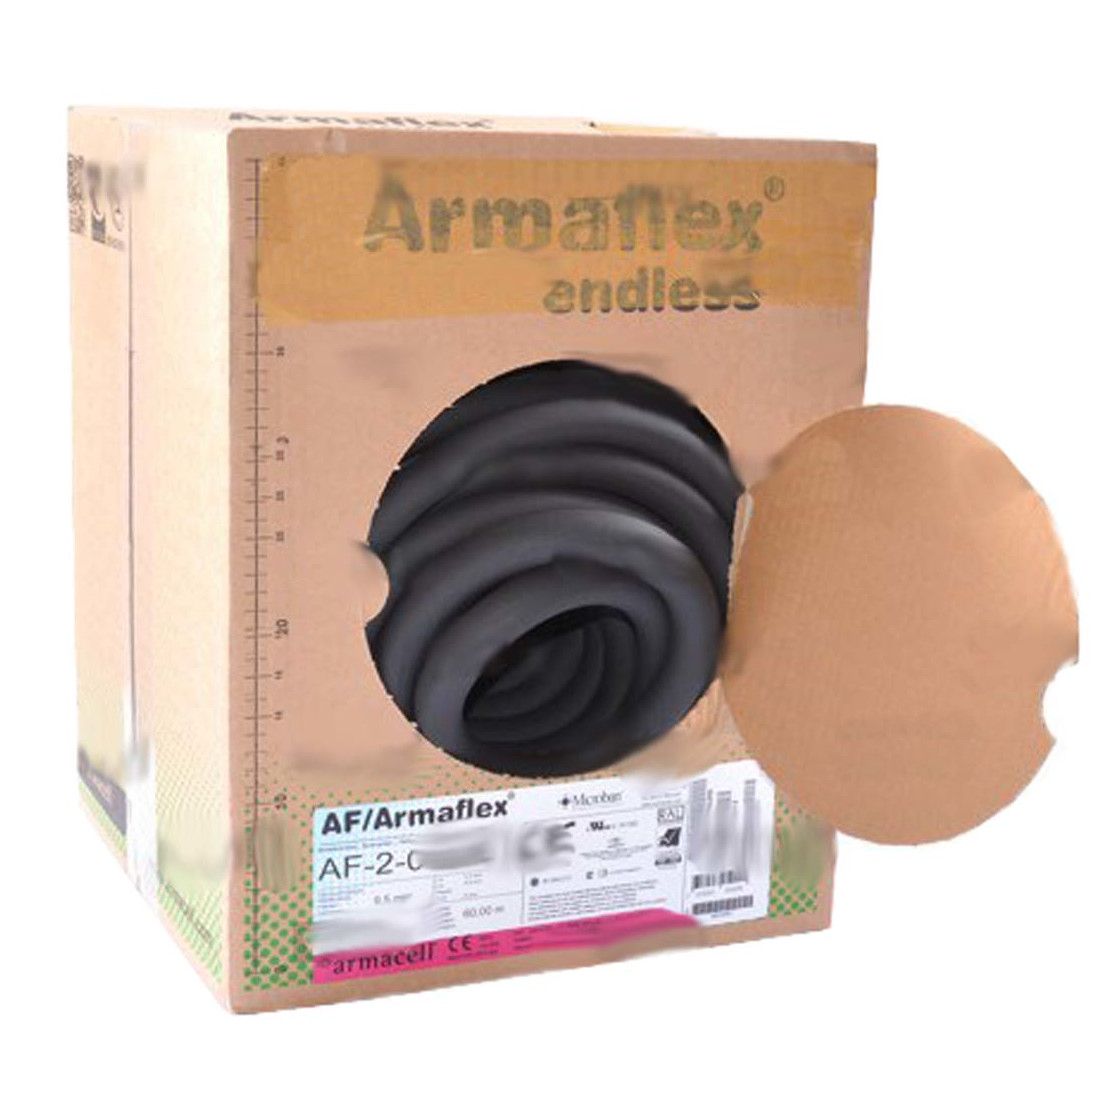 Insulation armaflex af tube 6mm 9-5mm, 142,01 €